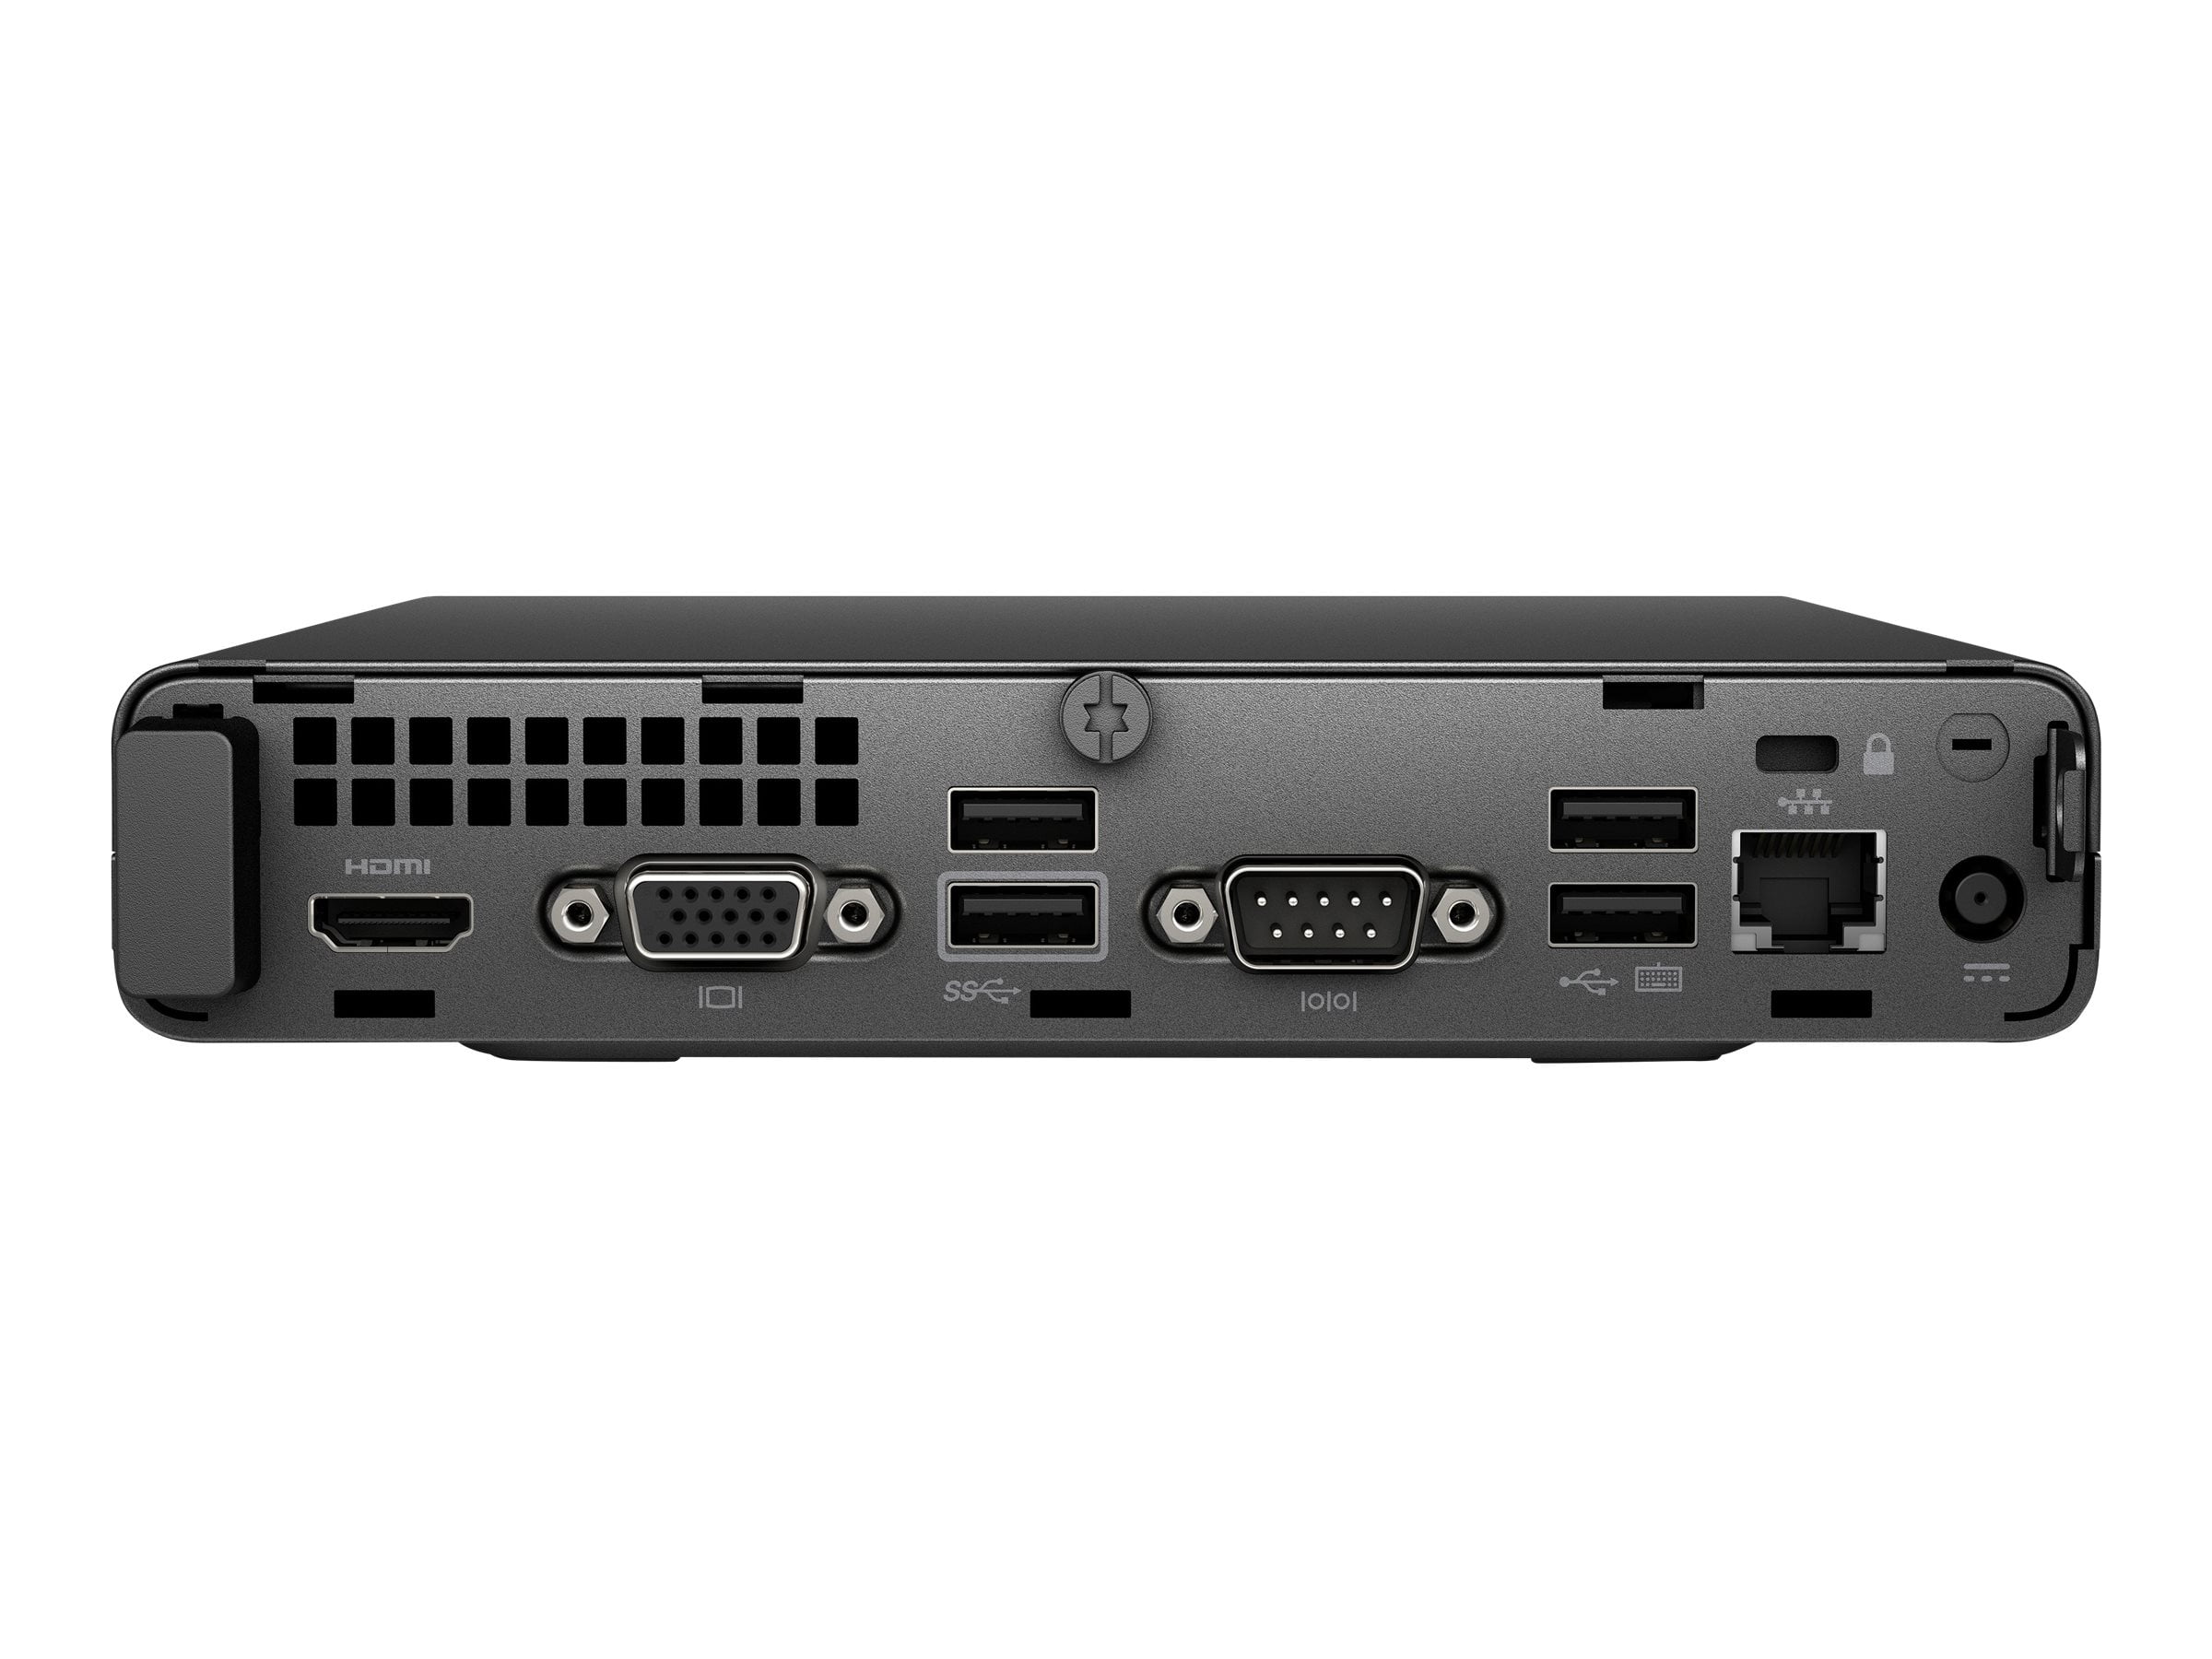 Renovatie bijtend Victor HP 260 G3 - Mini desktop - Core i3 7130U / 2.7 GHz - RAM 4 GB - HDD 500 GB  - HD Graphics 620 - GigE - WLAN: 802.11a/b/g/n/ac, Bluetooth 4.2 - FreeDOS  - monitor: none - Walmart.com